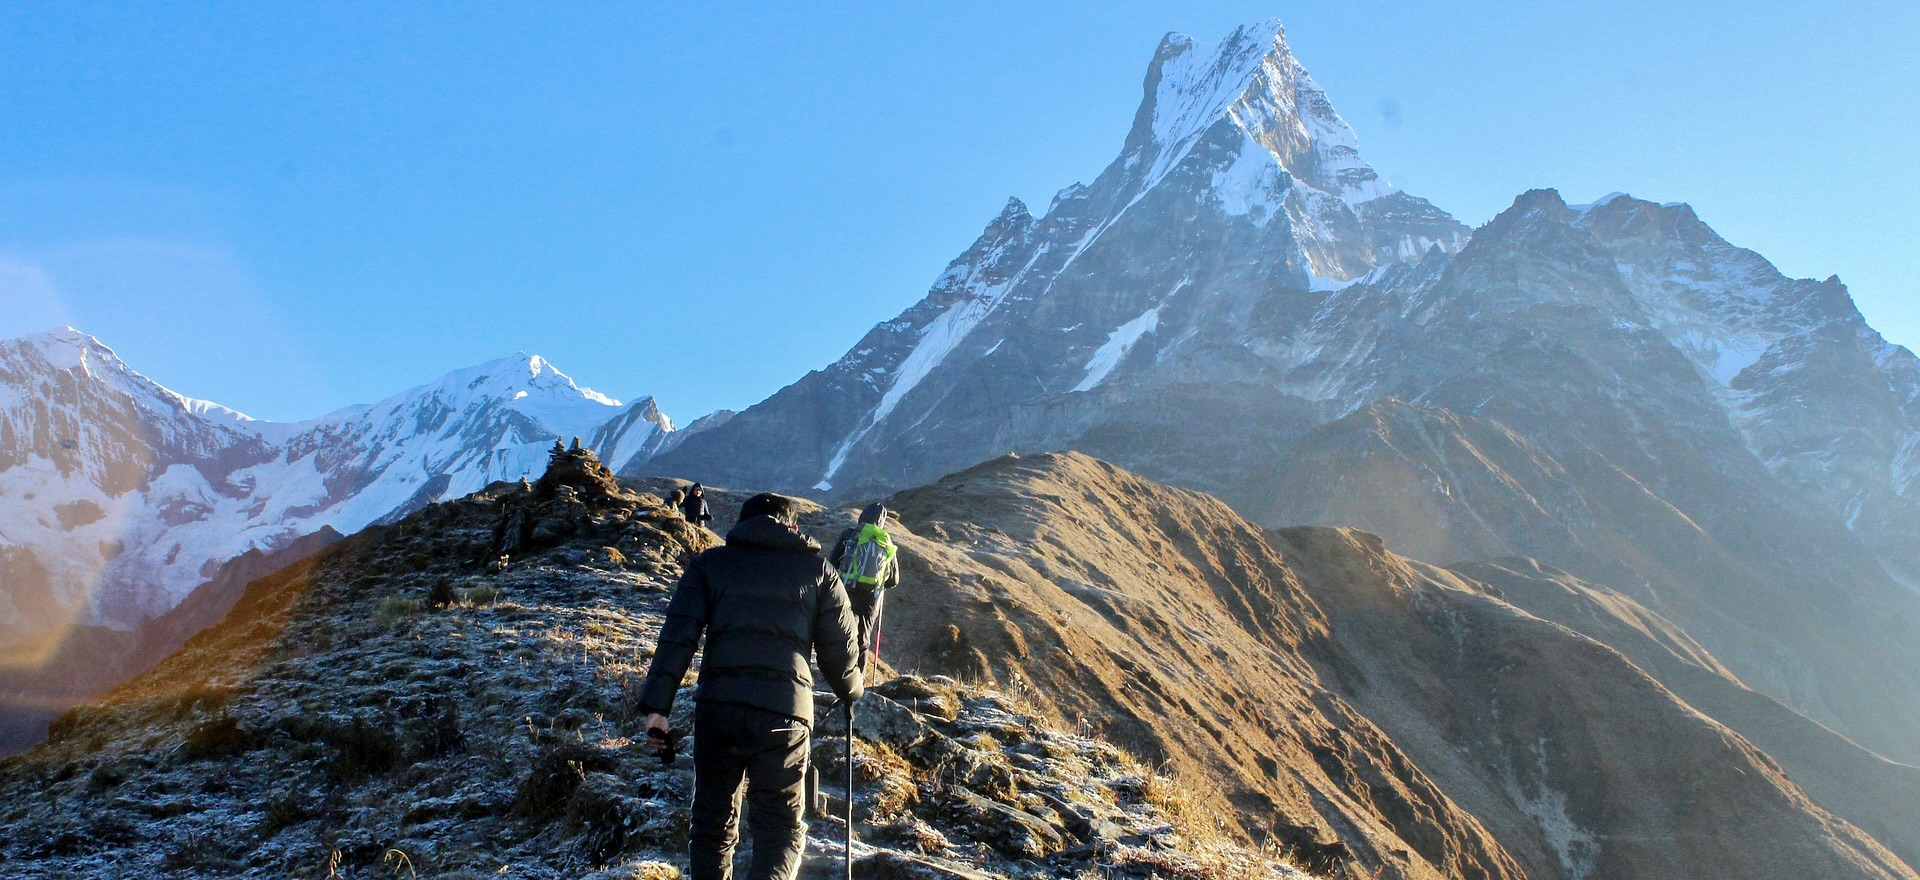 Best time for Trekking in Nepal